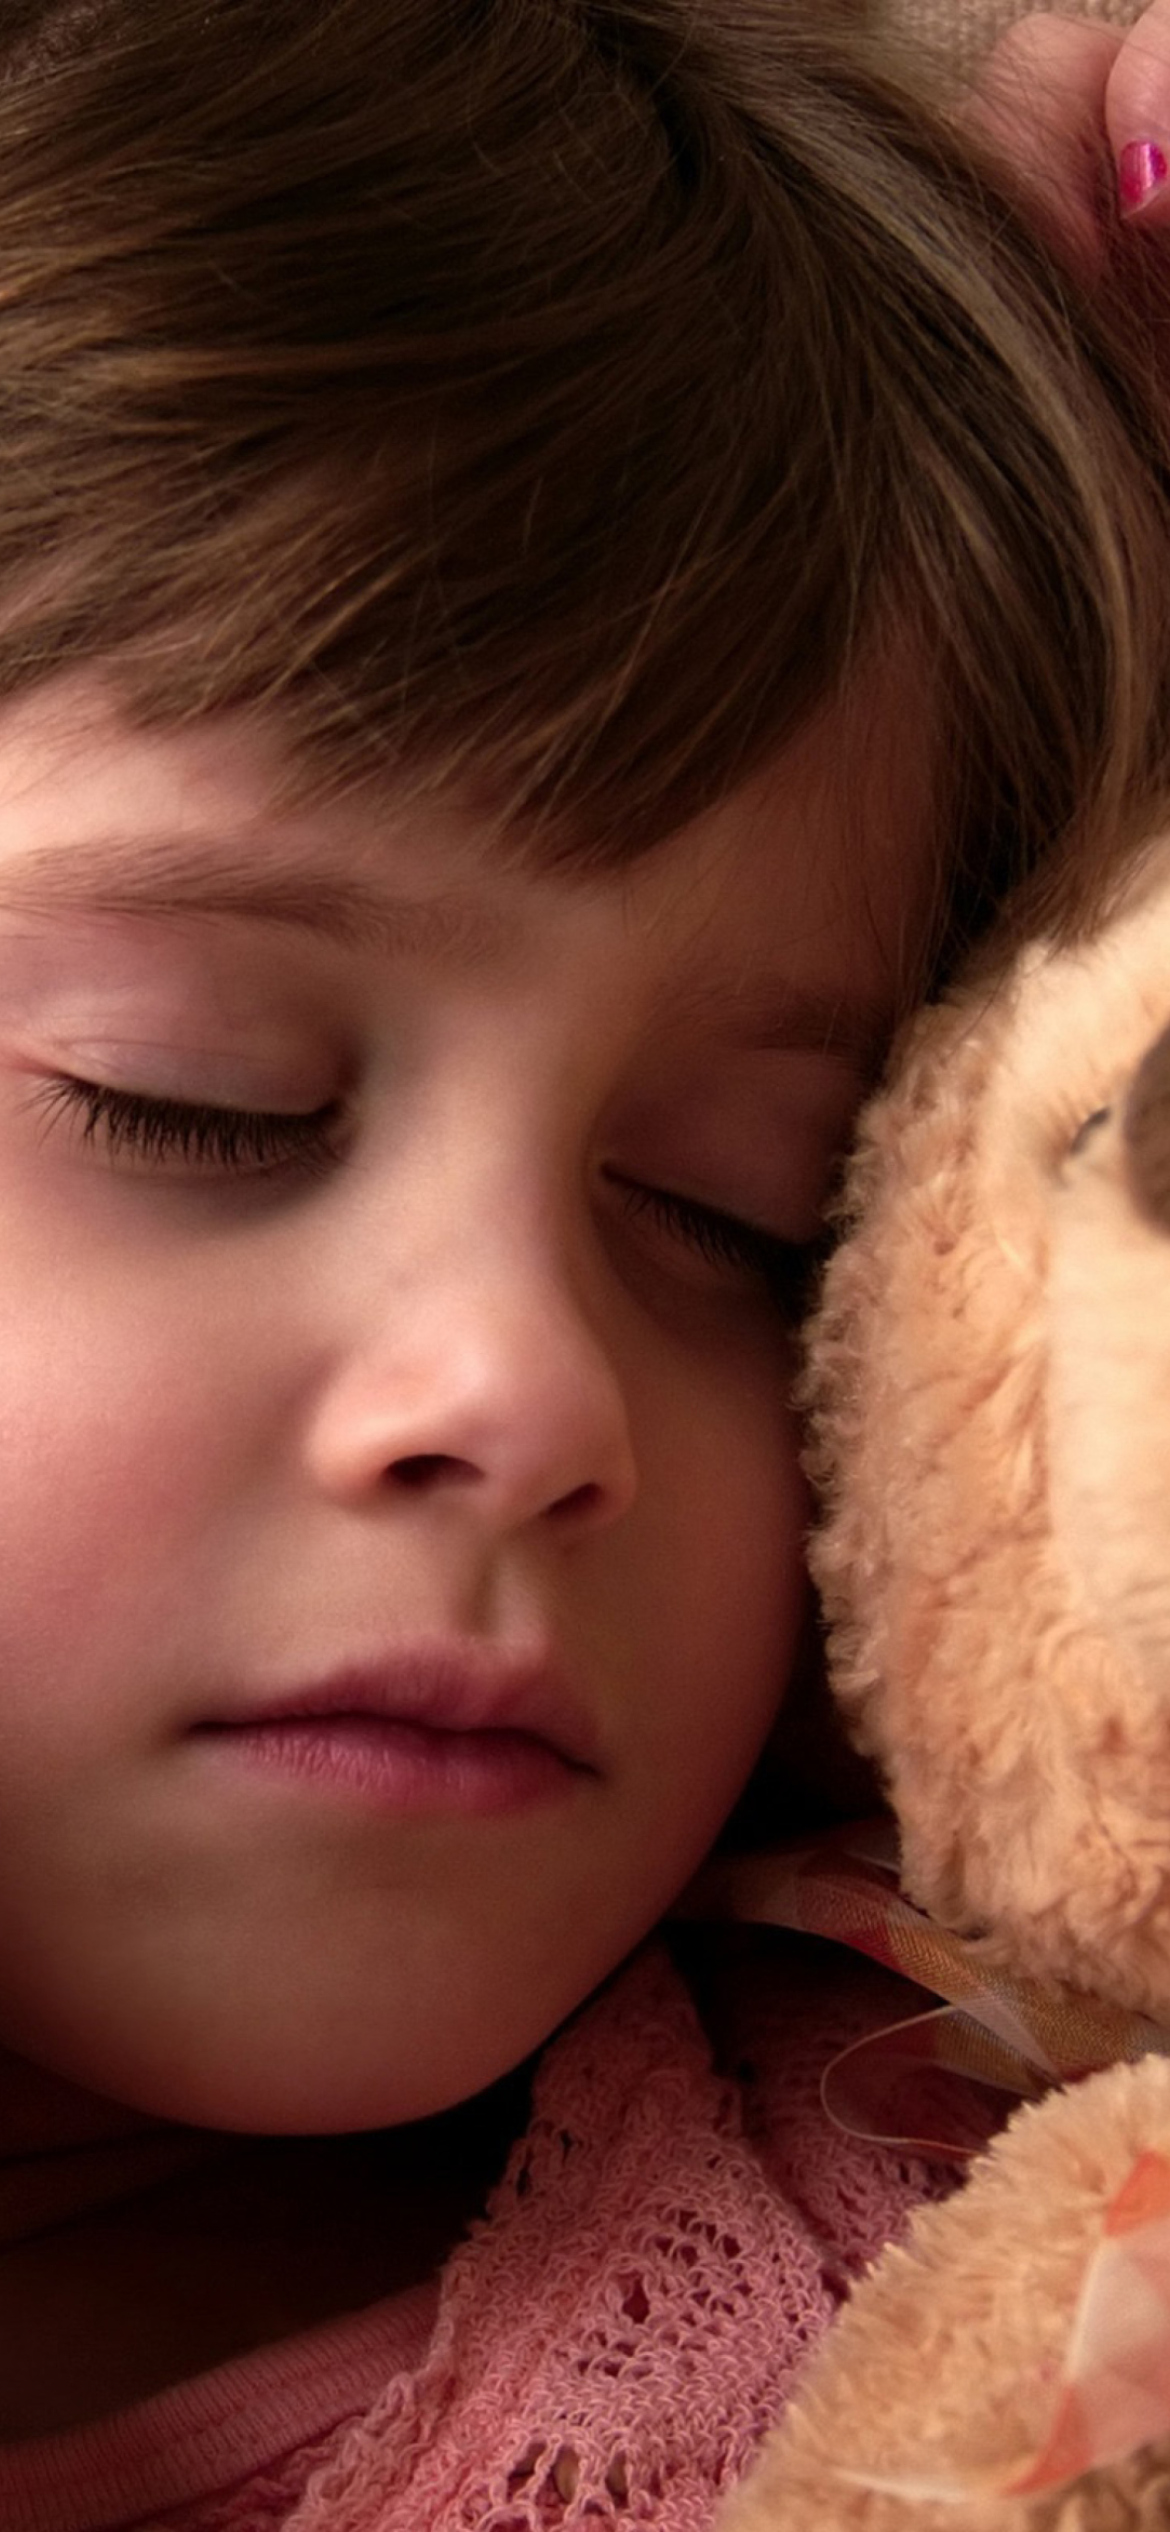 Child Sleeping With Teddy Bear wallpaper 1170x2532